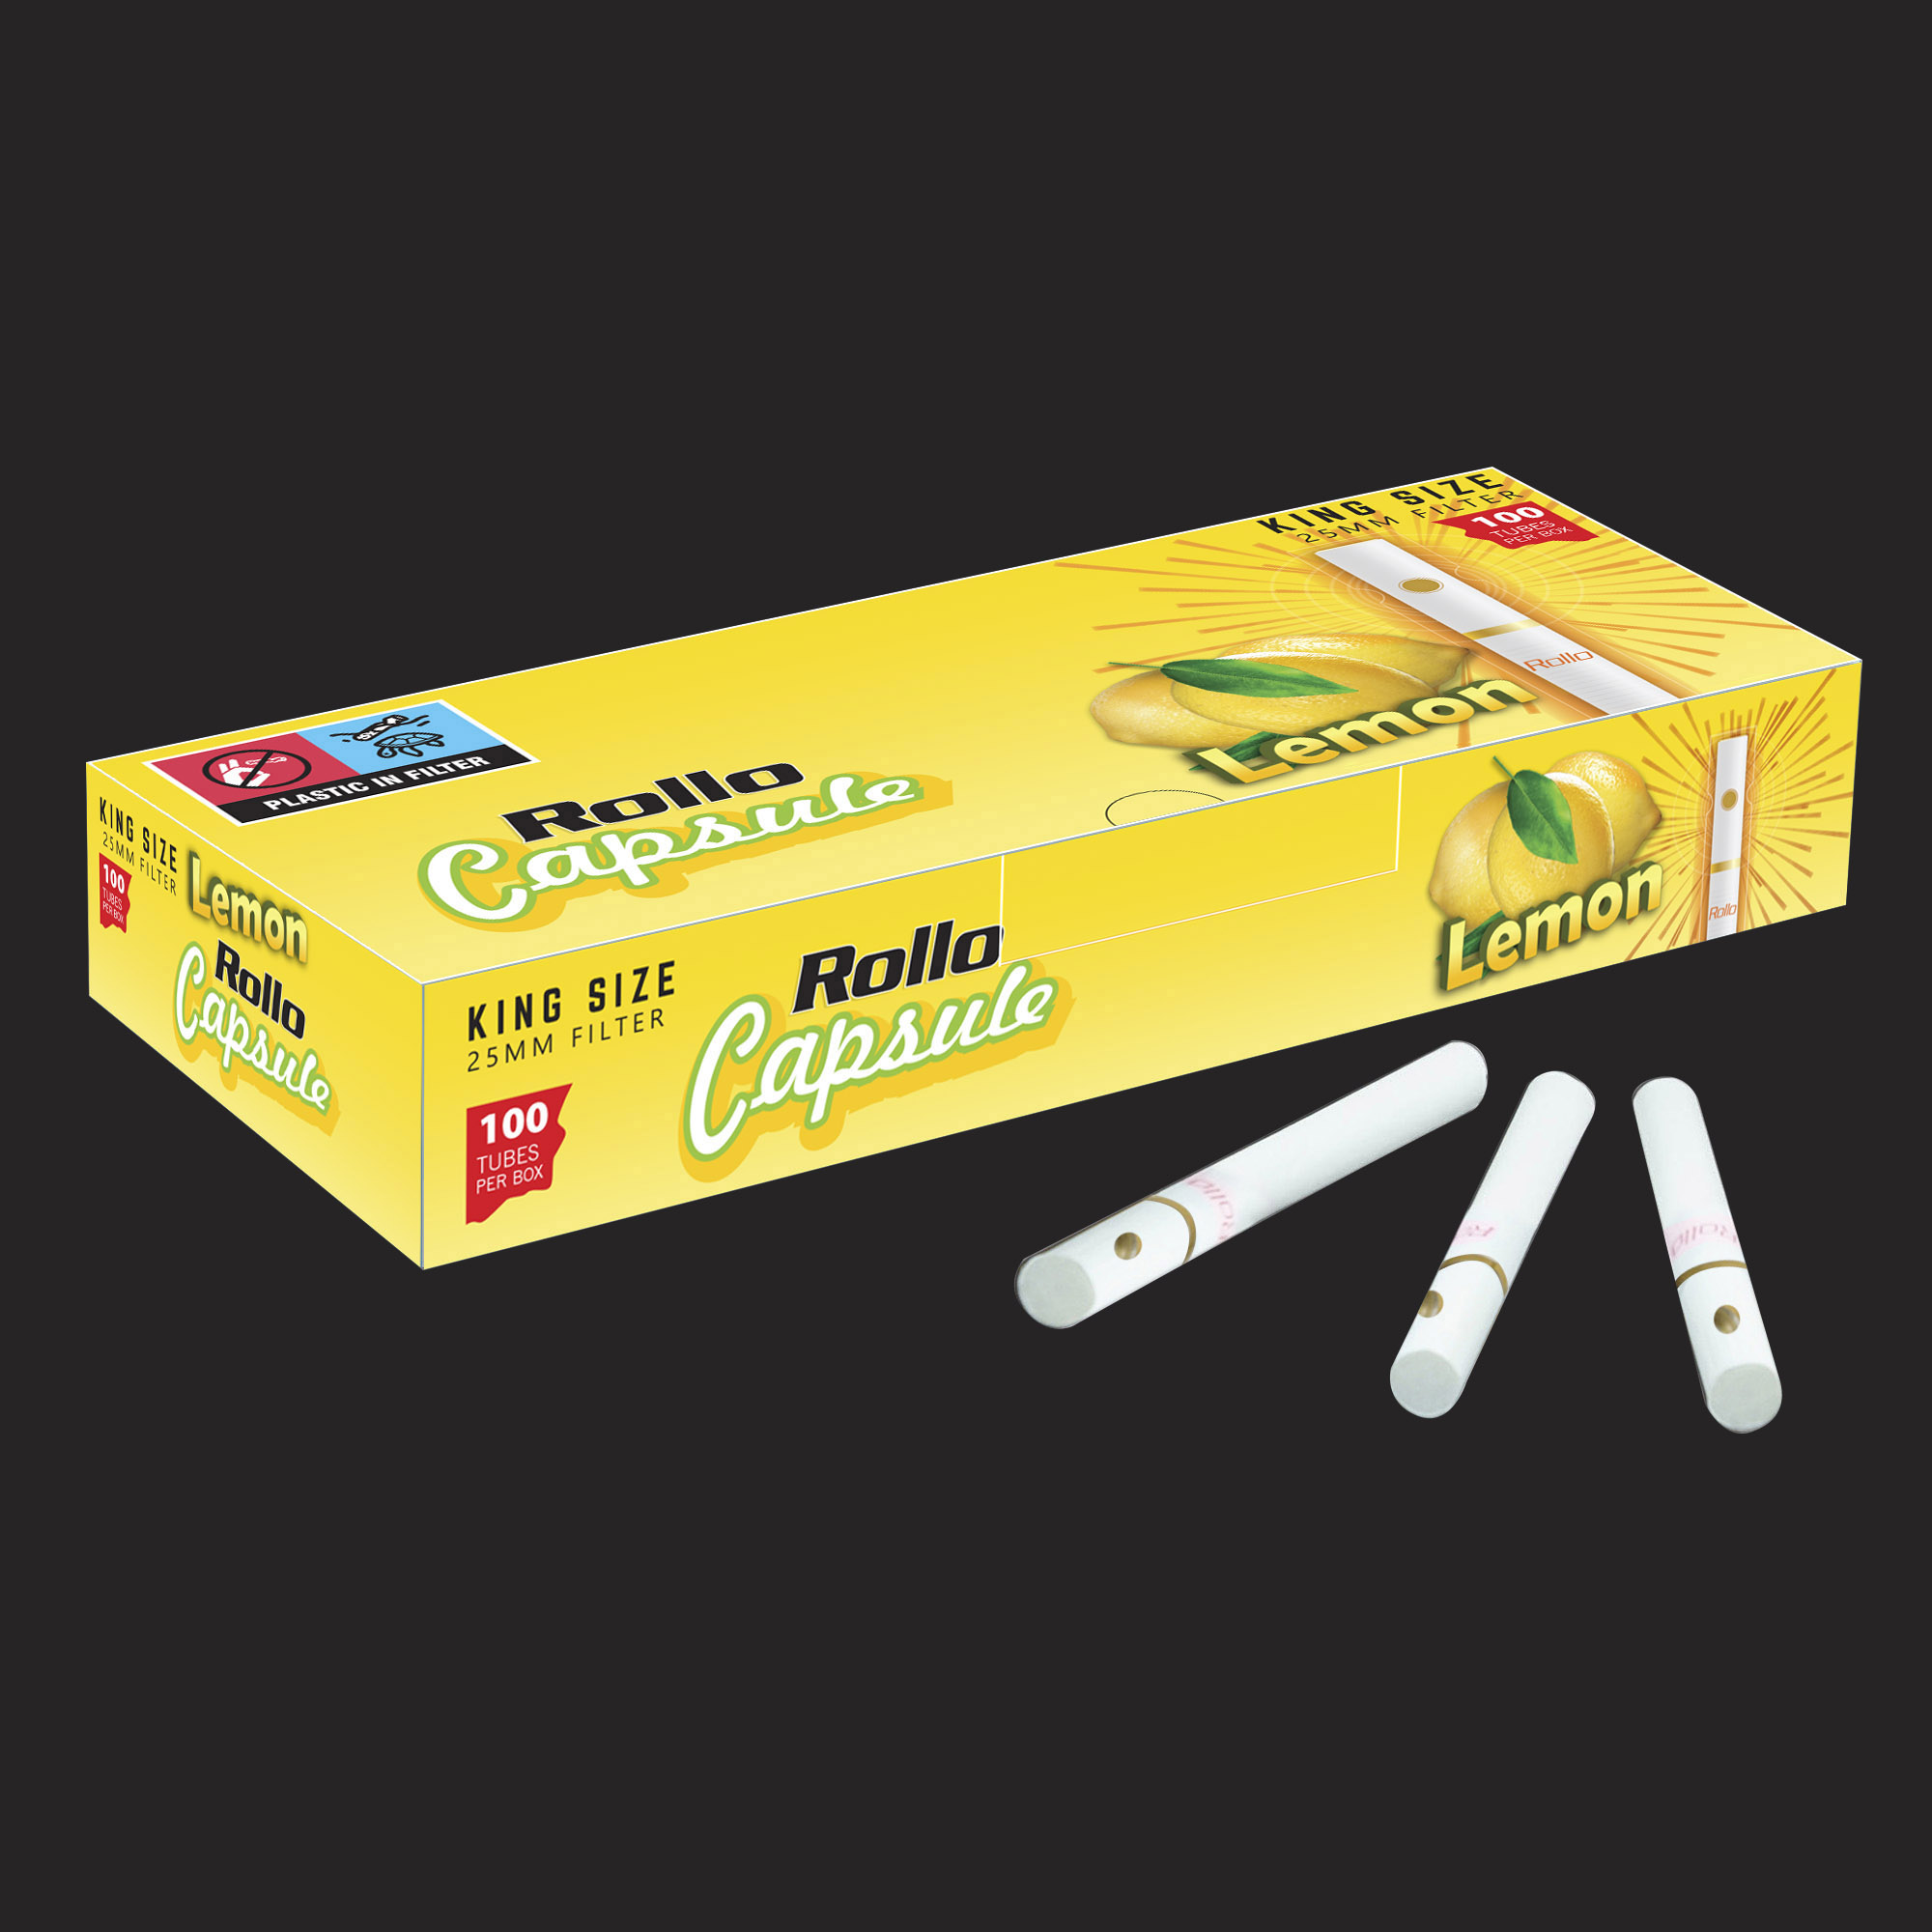 King Size Cigarette Tubes Rollo Lemon Capsule 100 CT